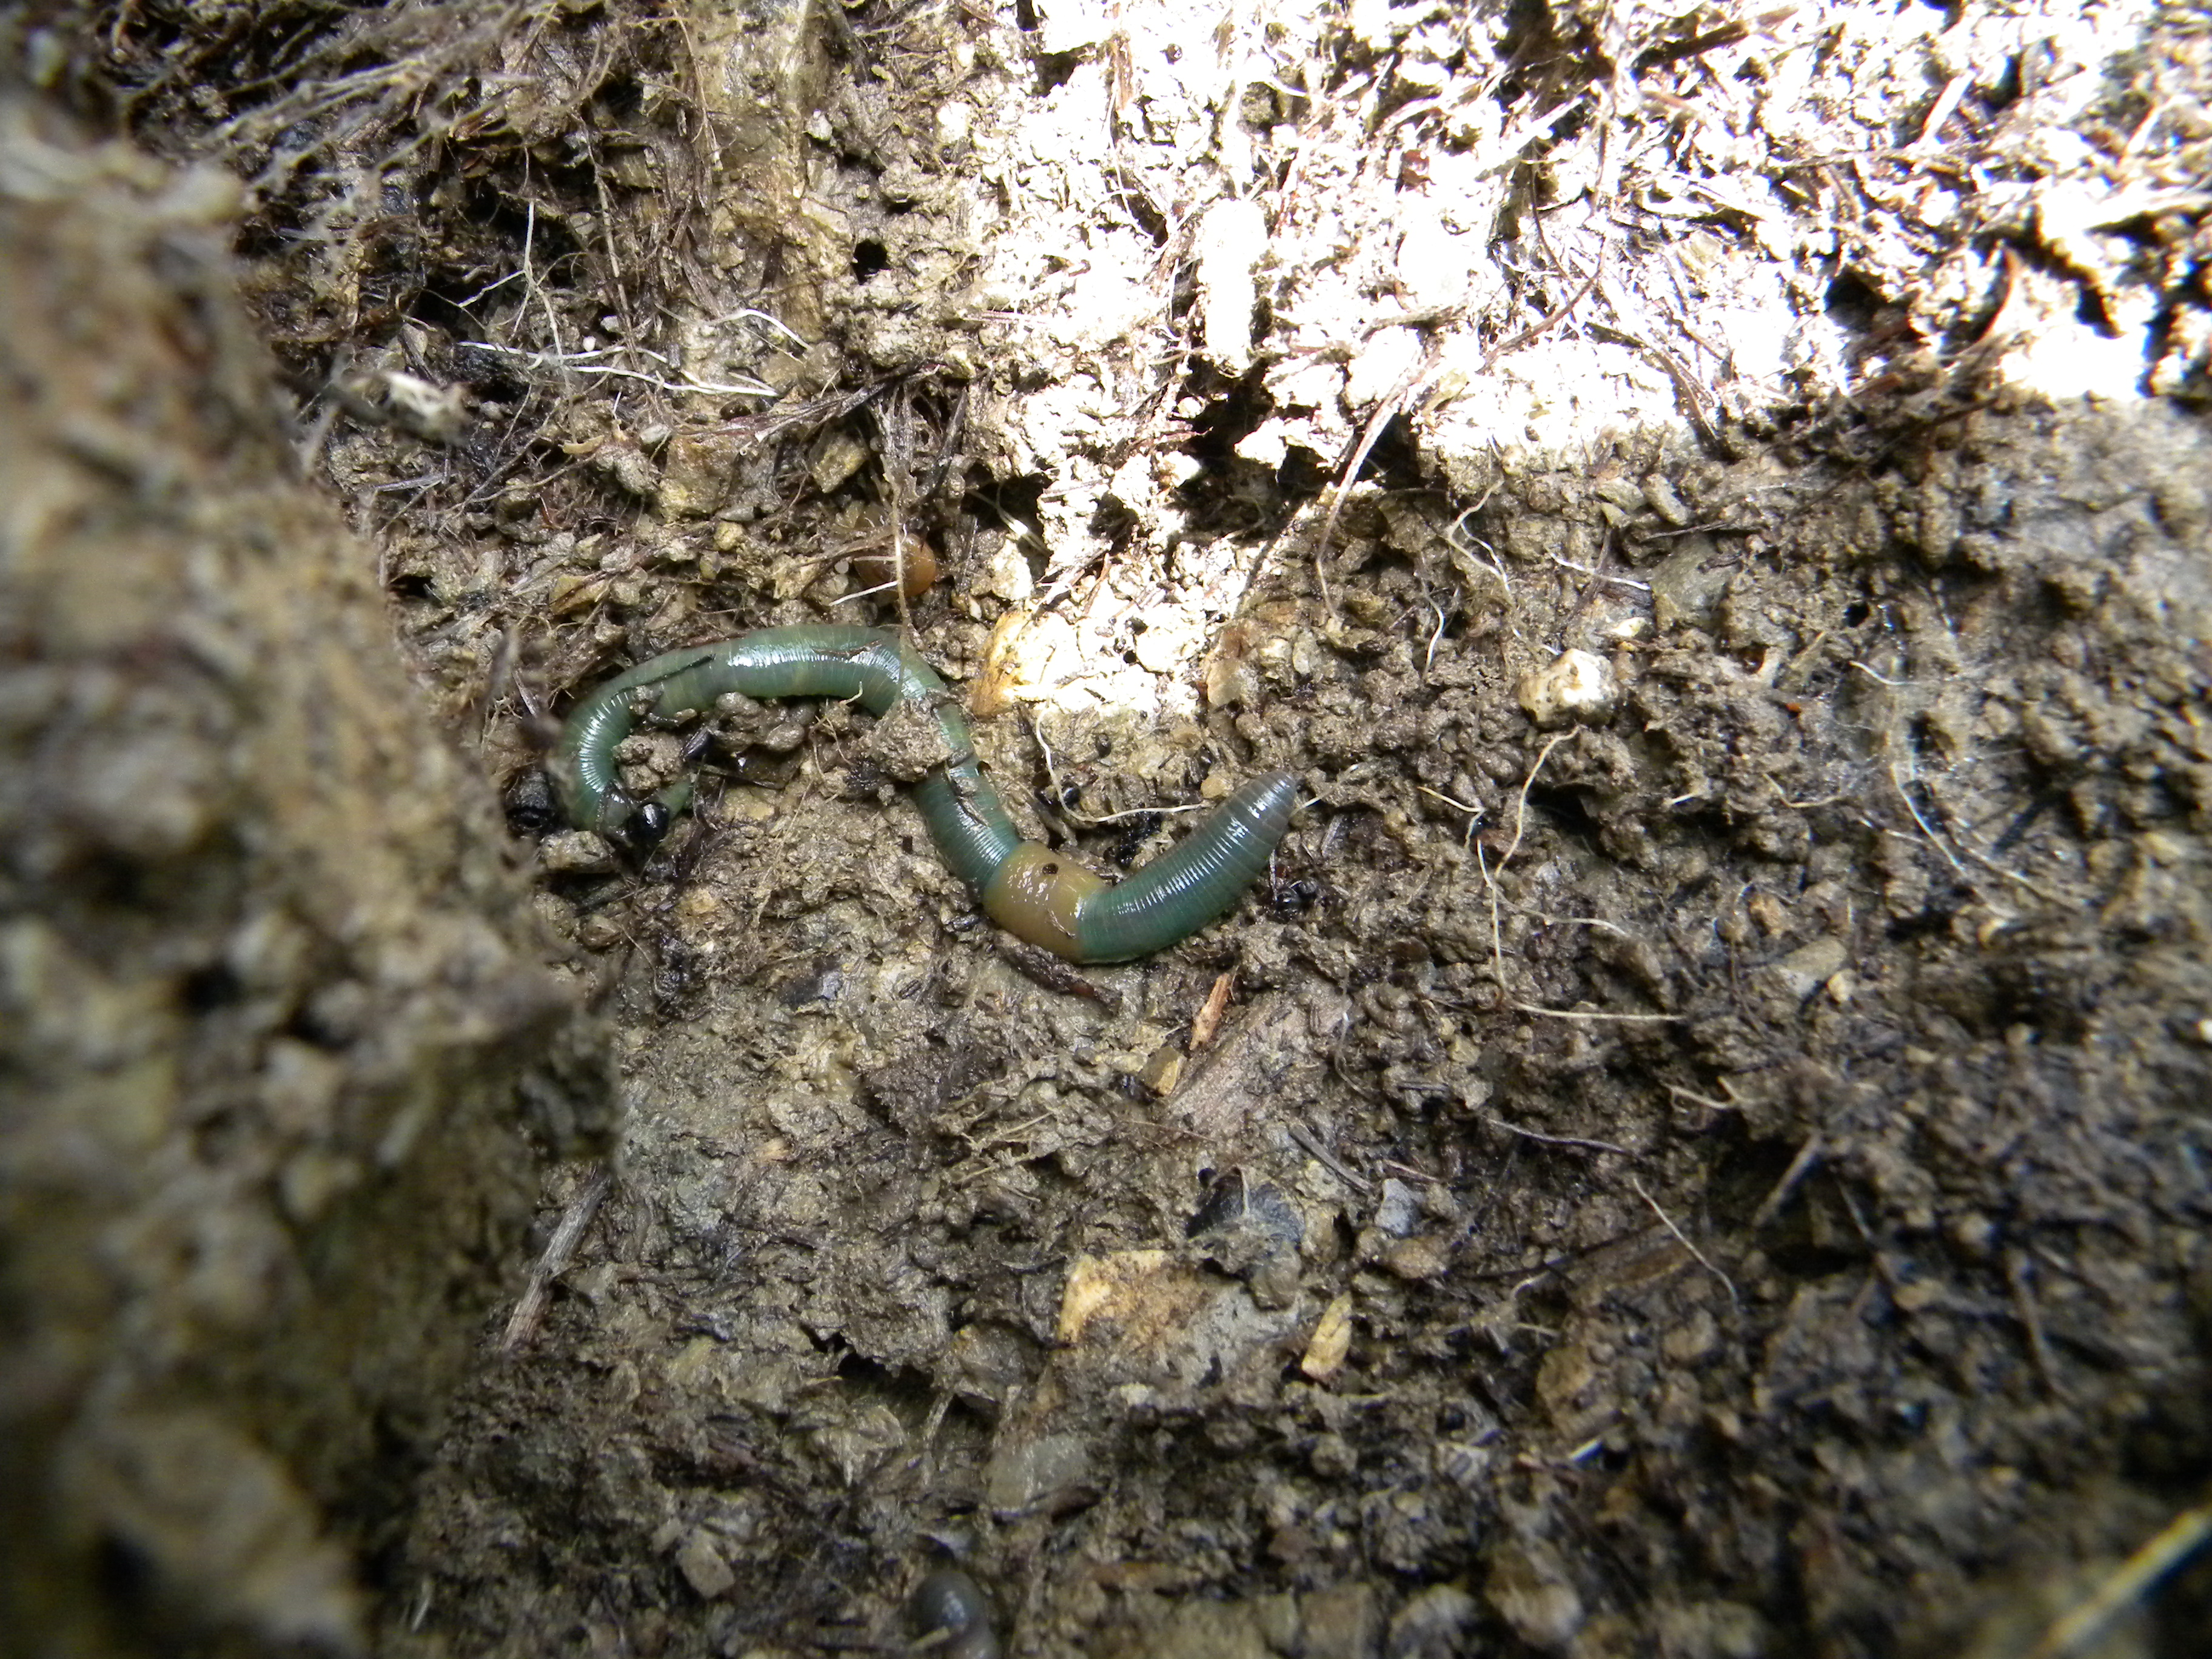 File:Green Earthworm.jpg - Wikimedia Commons